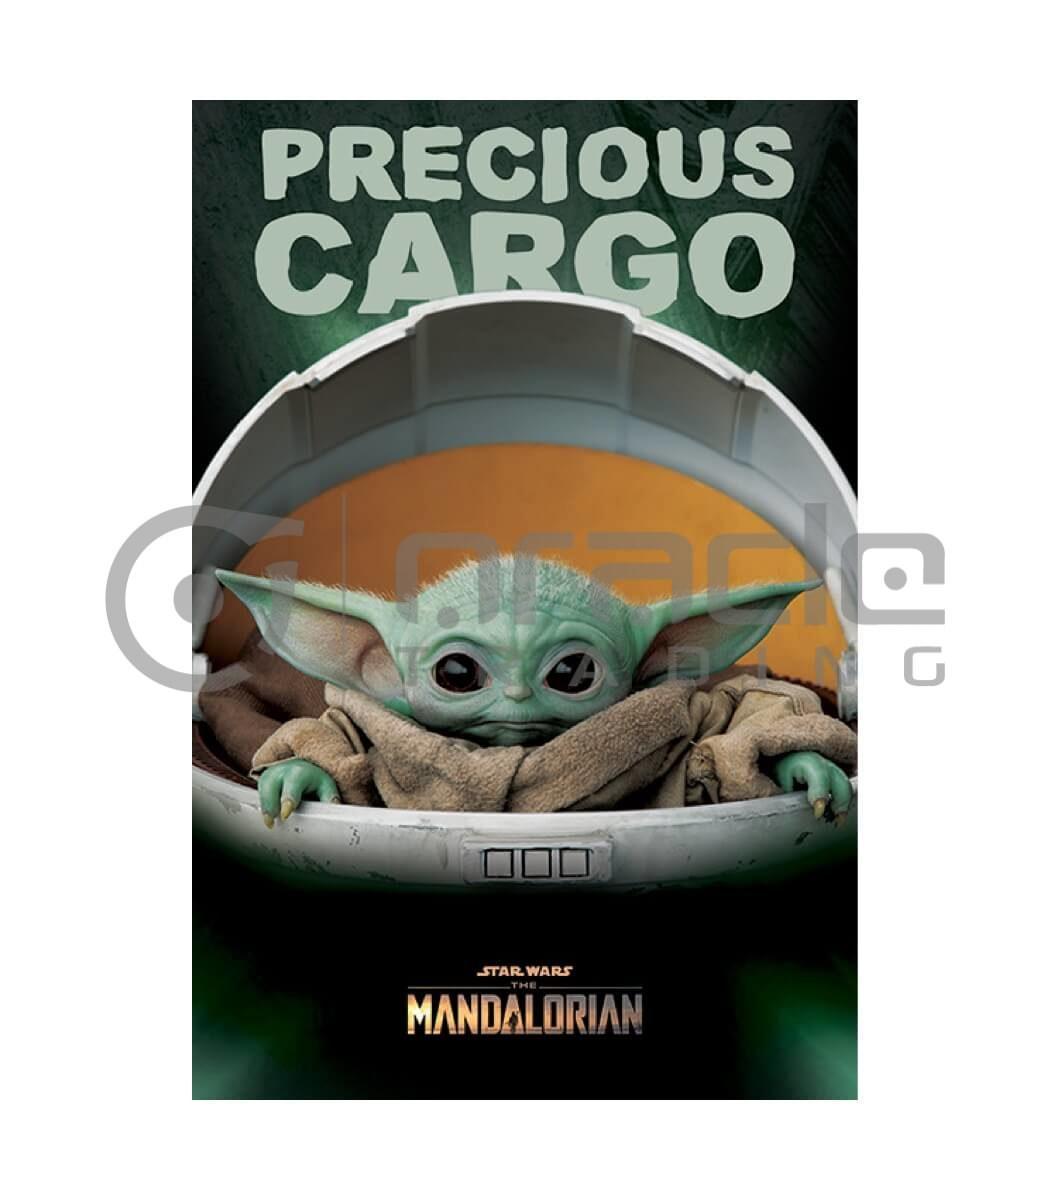 Star Wars: The Mandalorian Poster - Precious Cargo